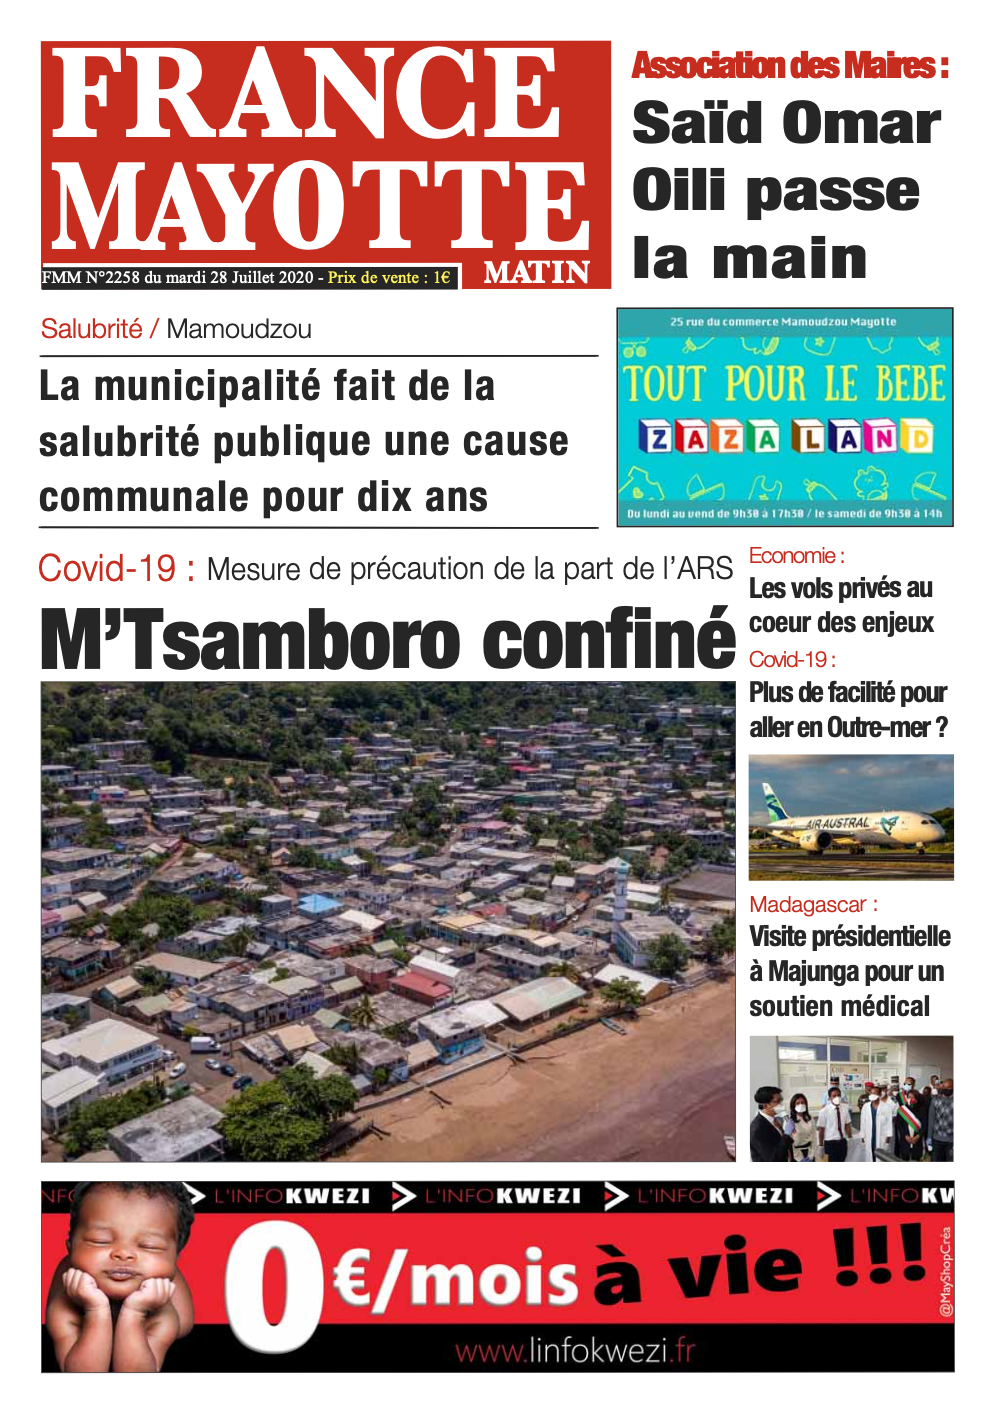 France Mayotte Mardi 28 juillet 2020